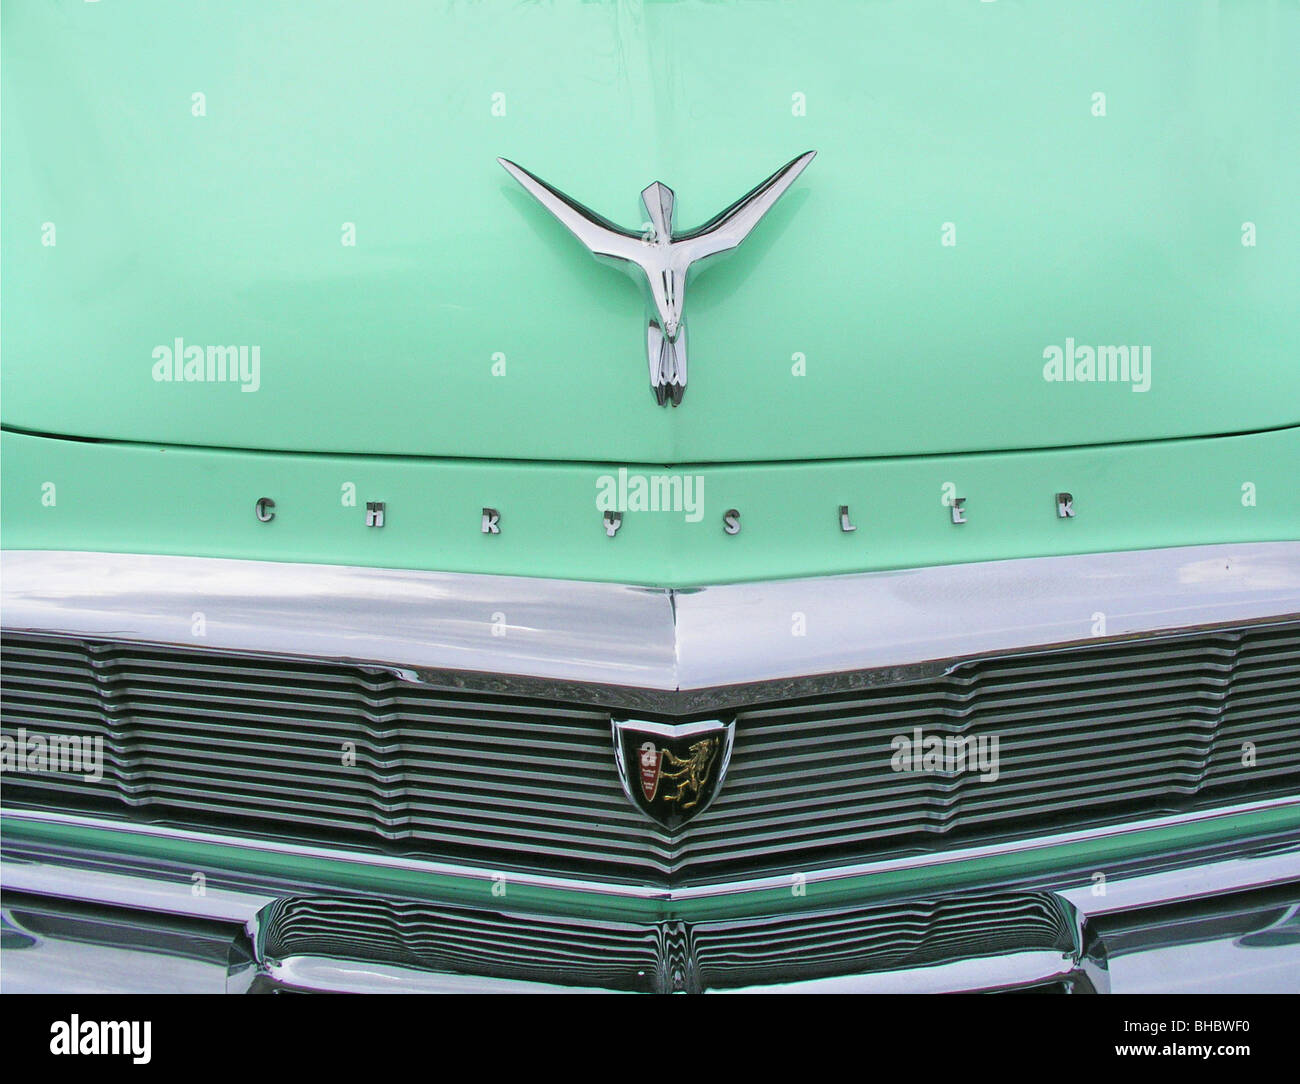 Chrysler auto car mint green ornament grille wings hood bumper